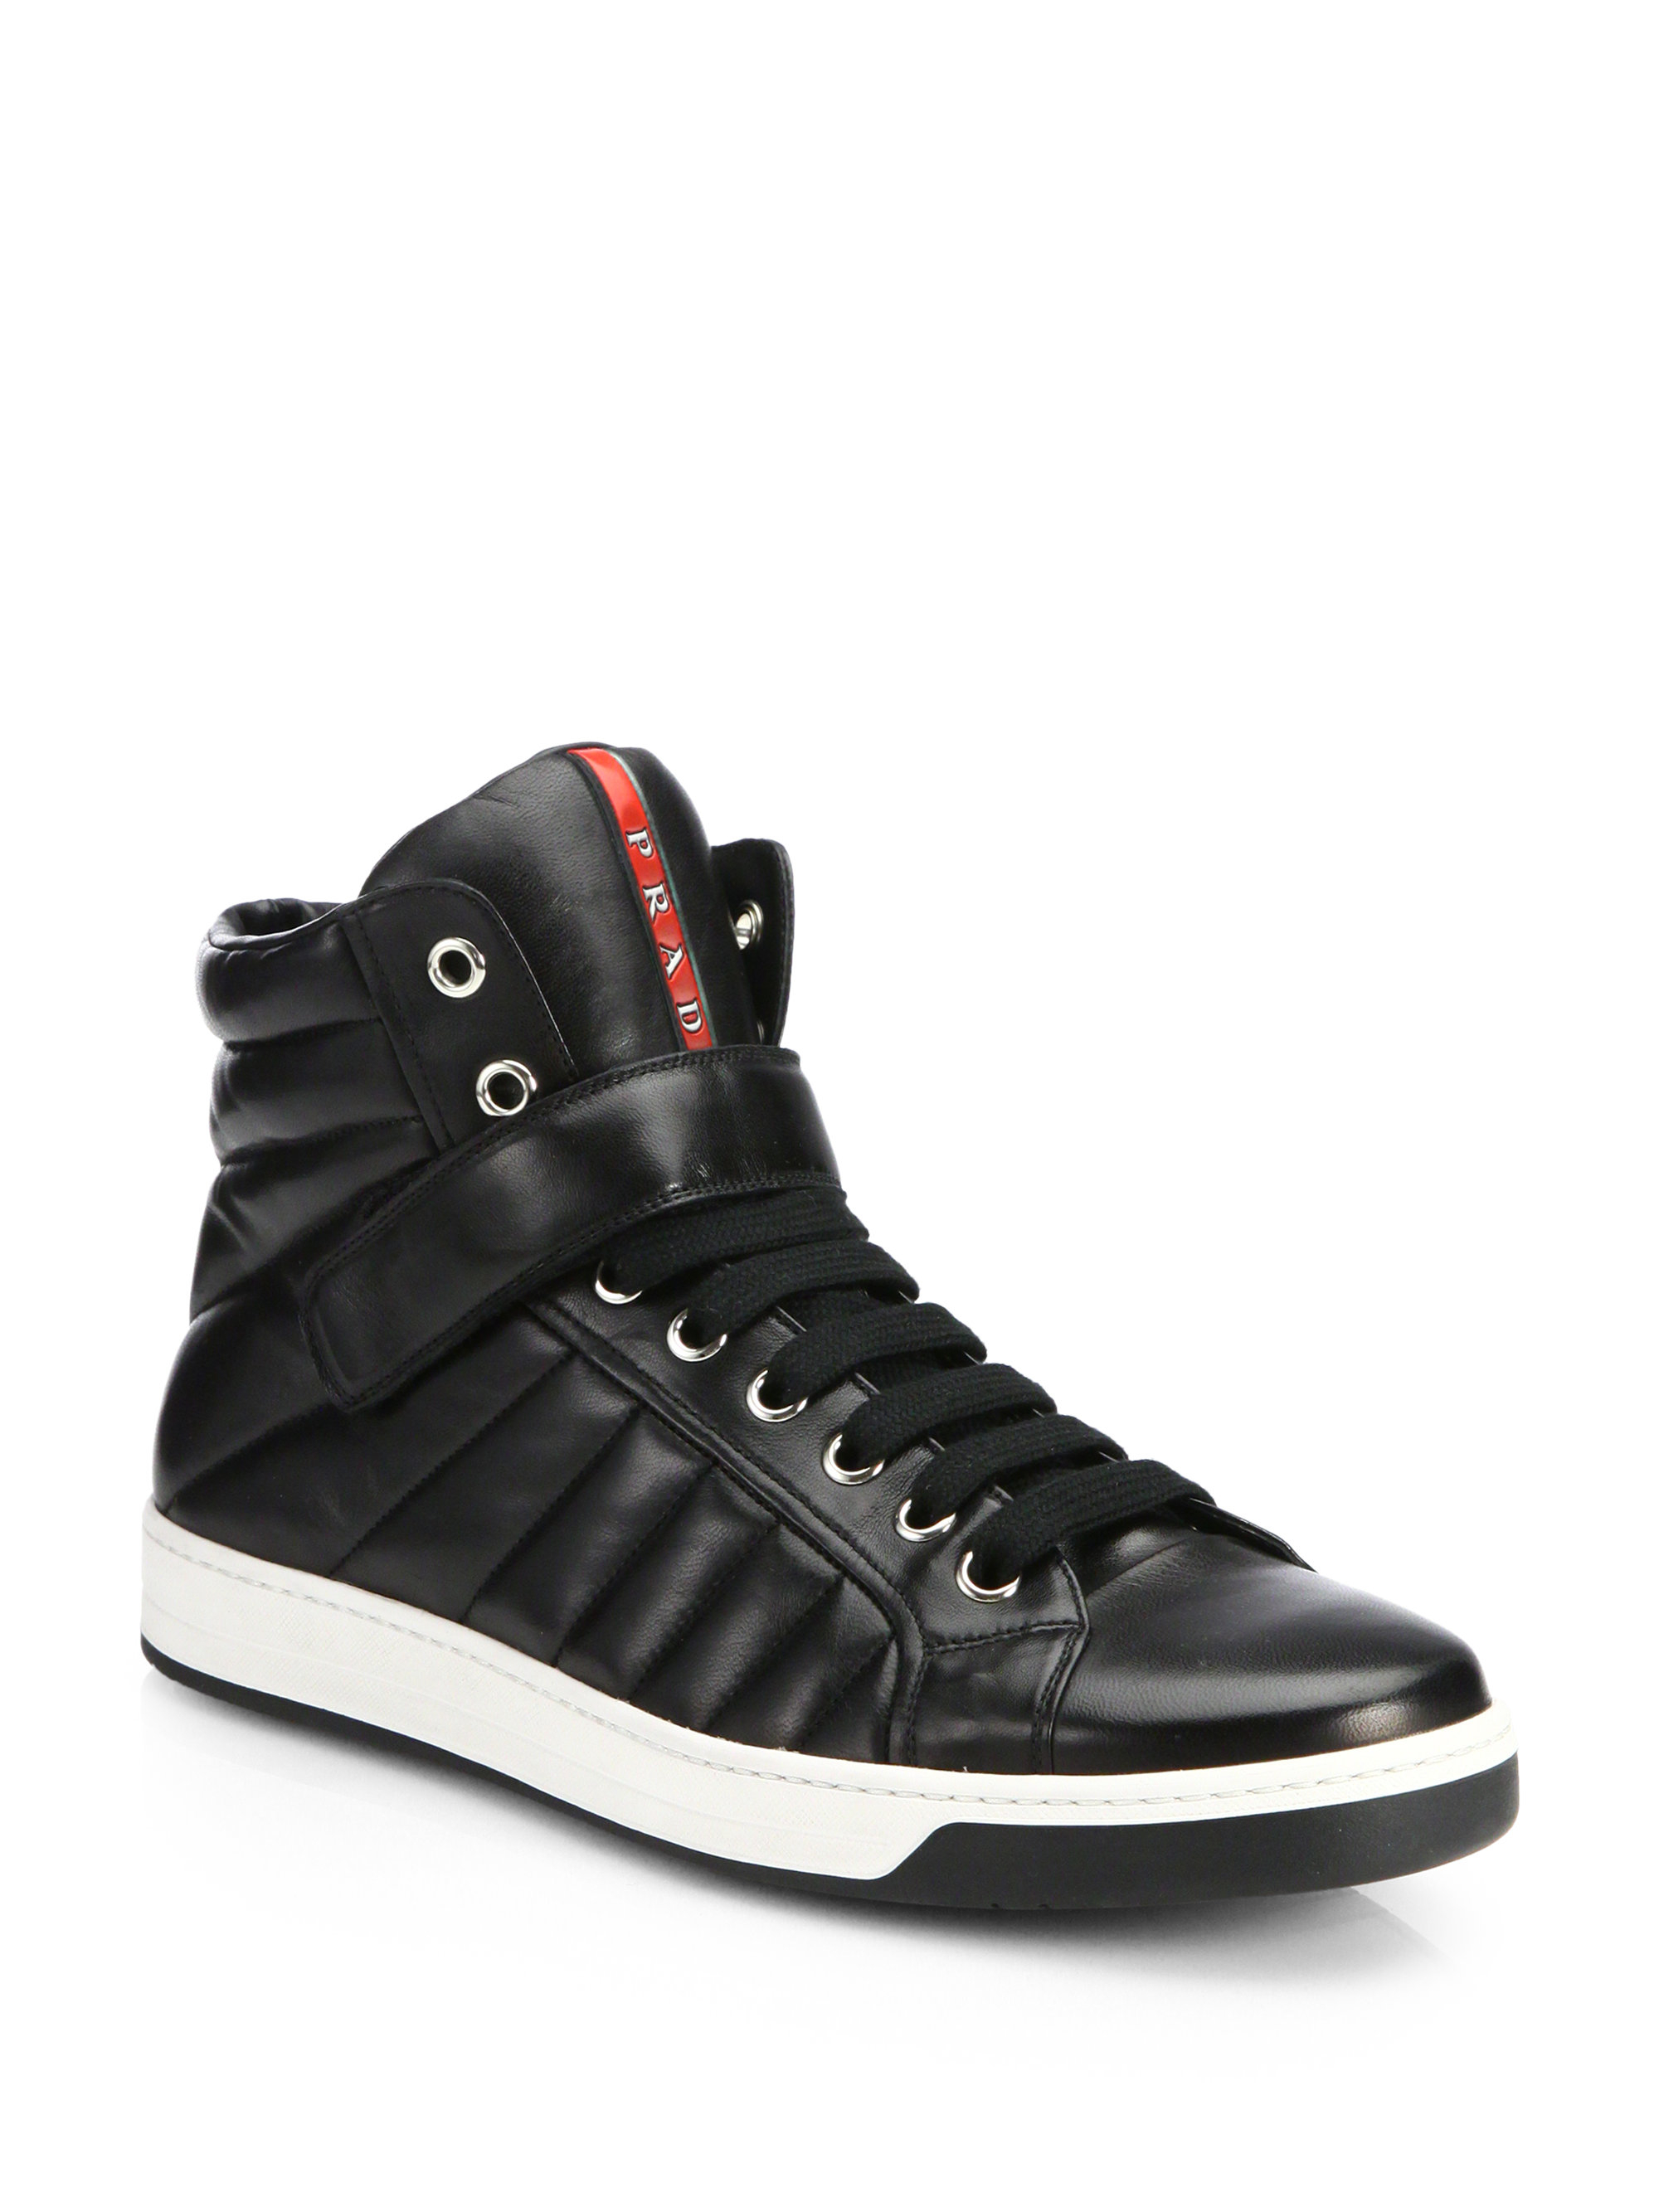 Prada Nappa Leather High Top Sneakers In Black For Men Lyst